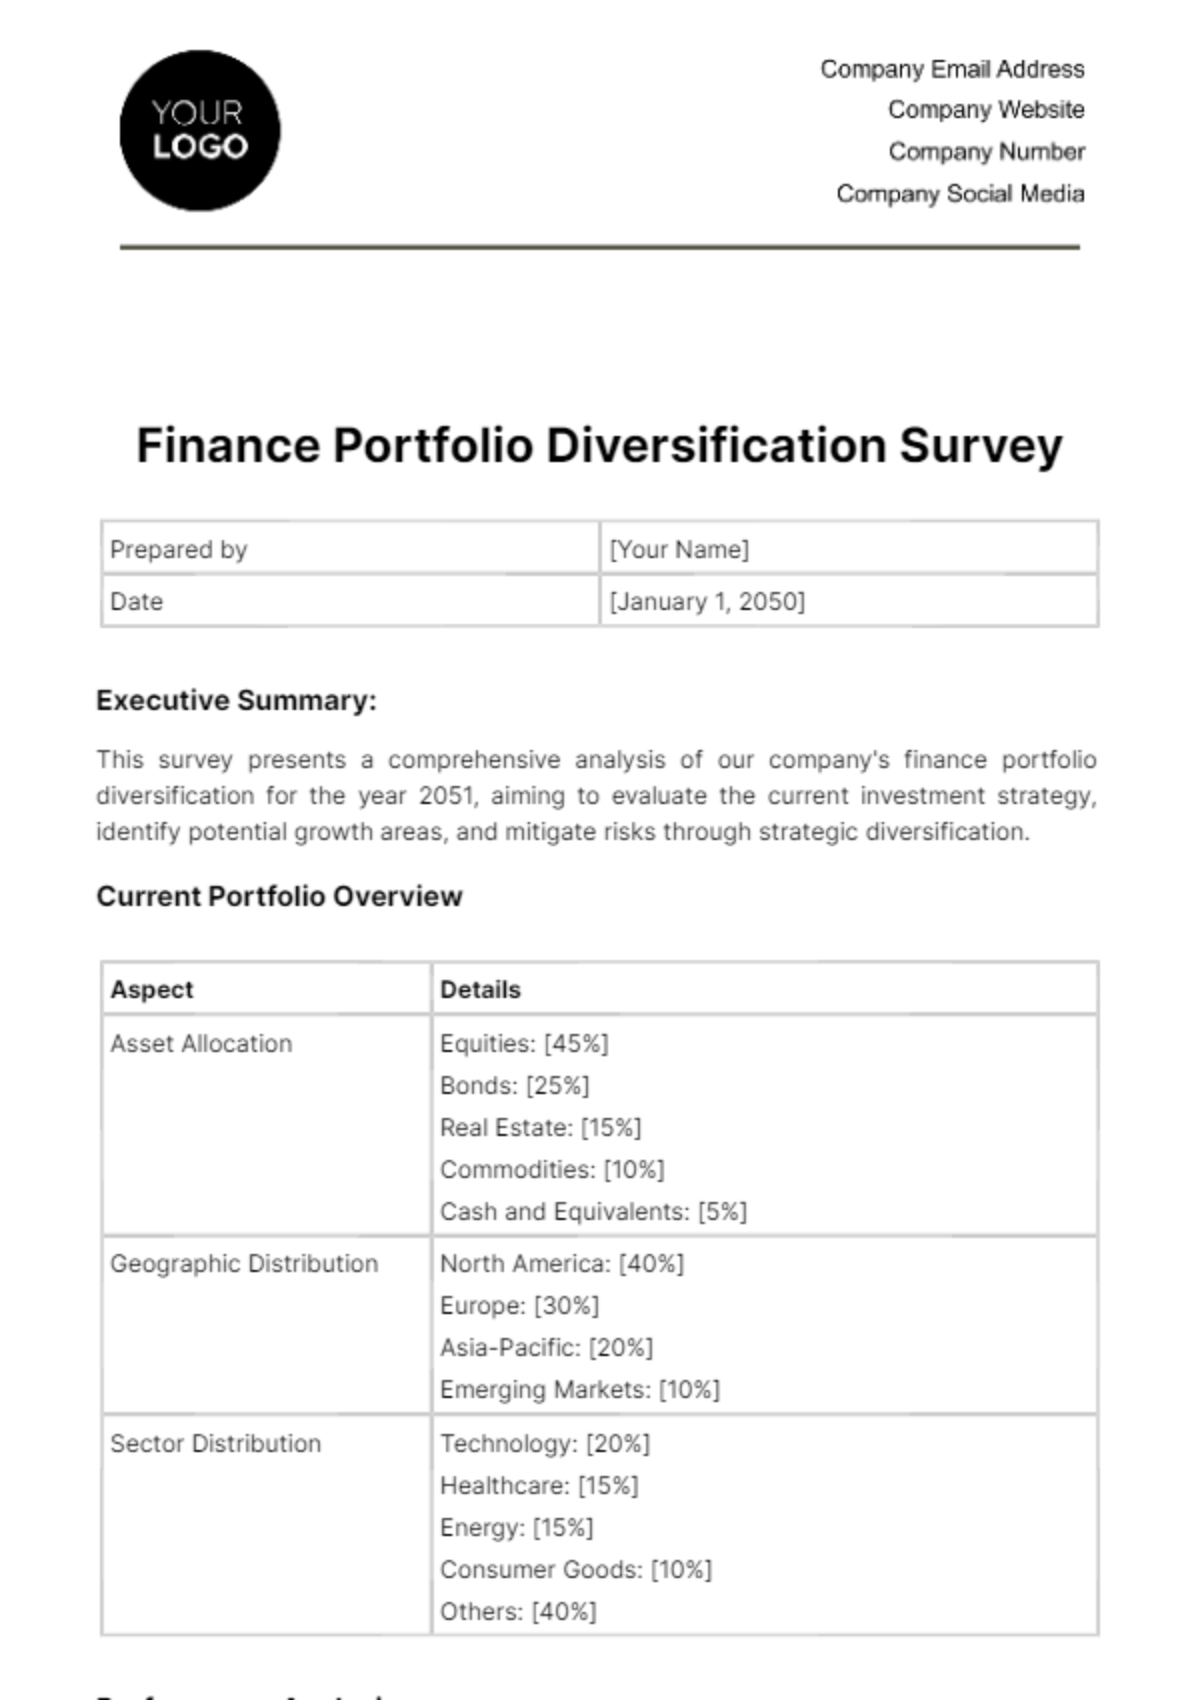 Finance Portfolio Diversification Survey Template